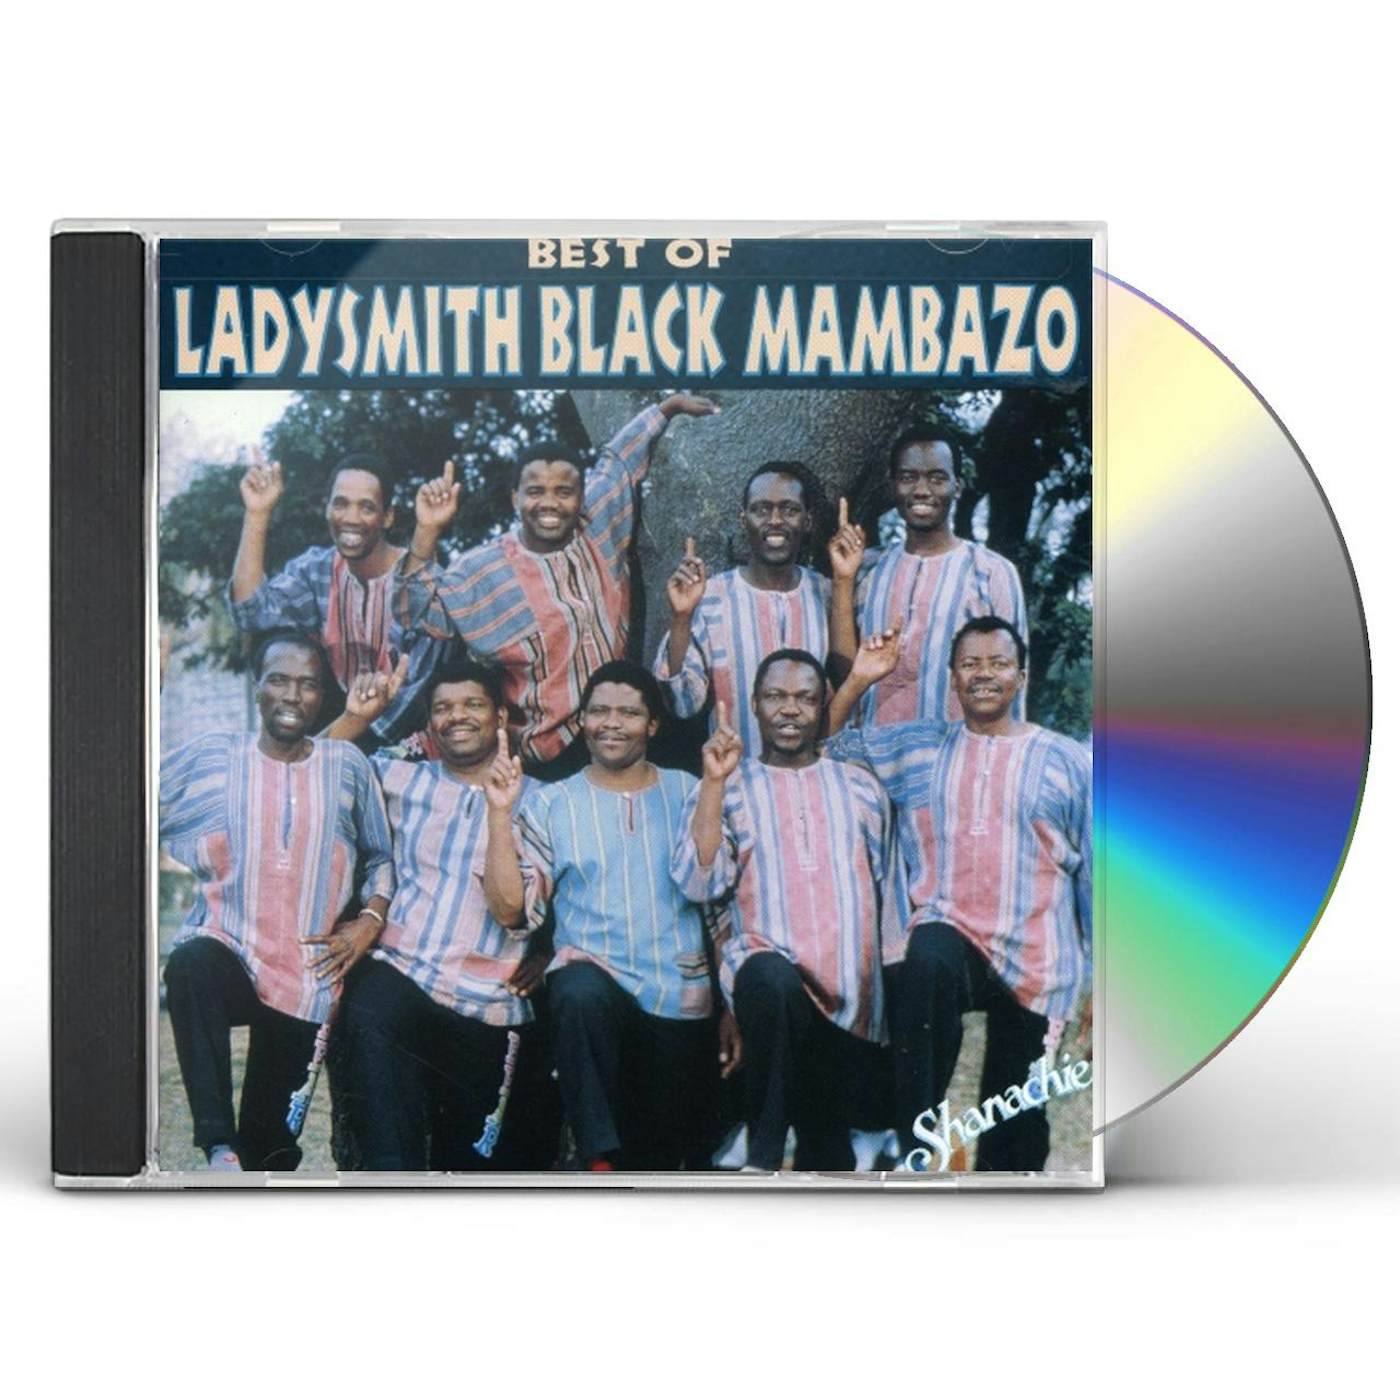 Ladysmith Black Mambazo BEST OF CD